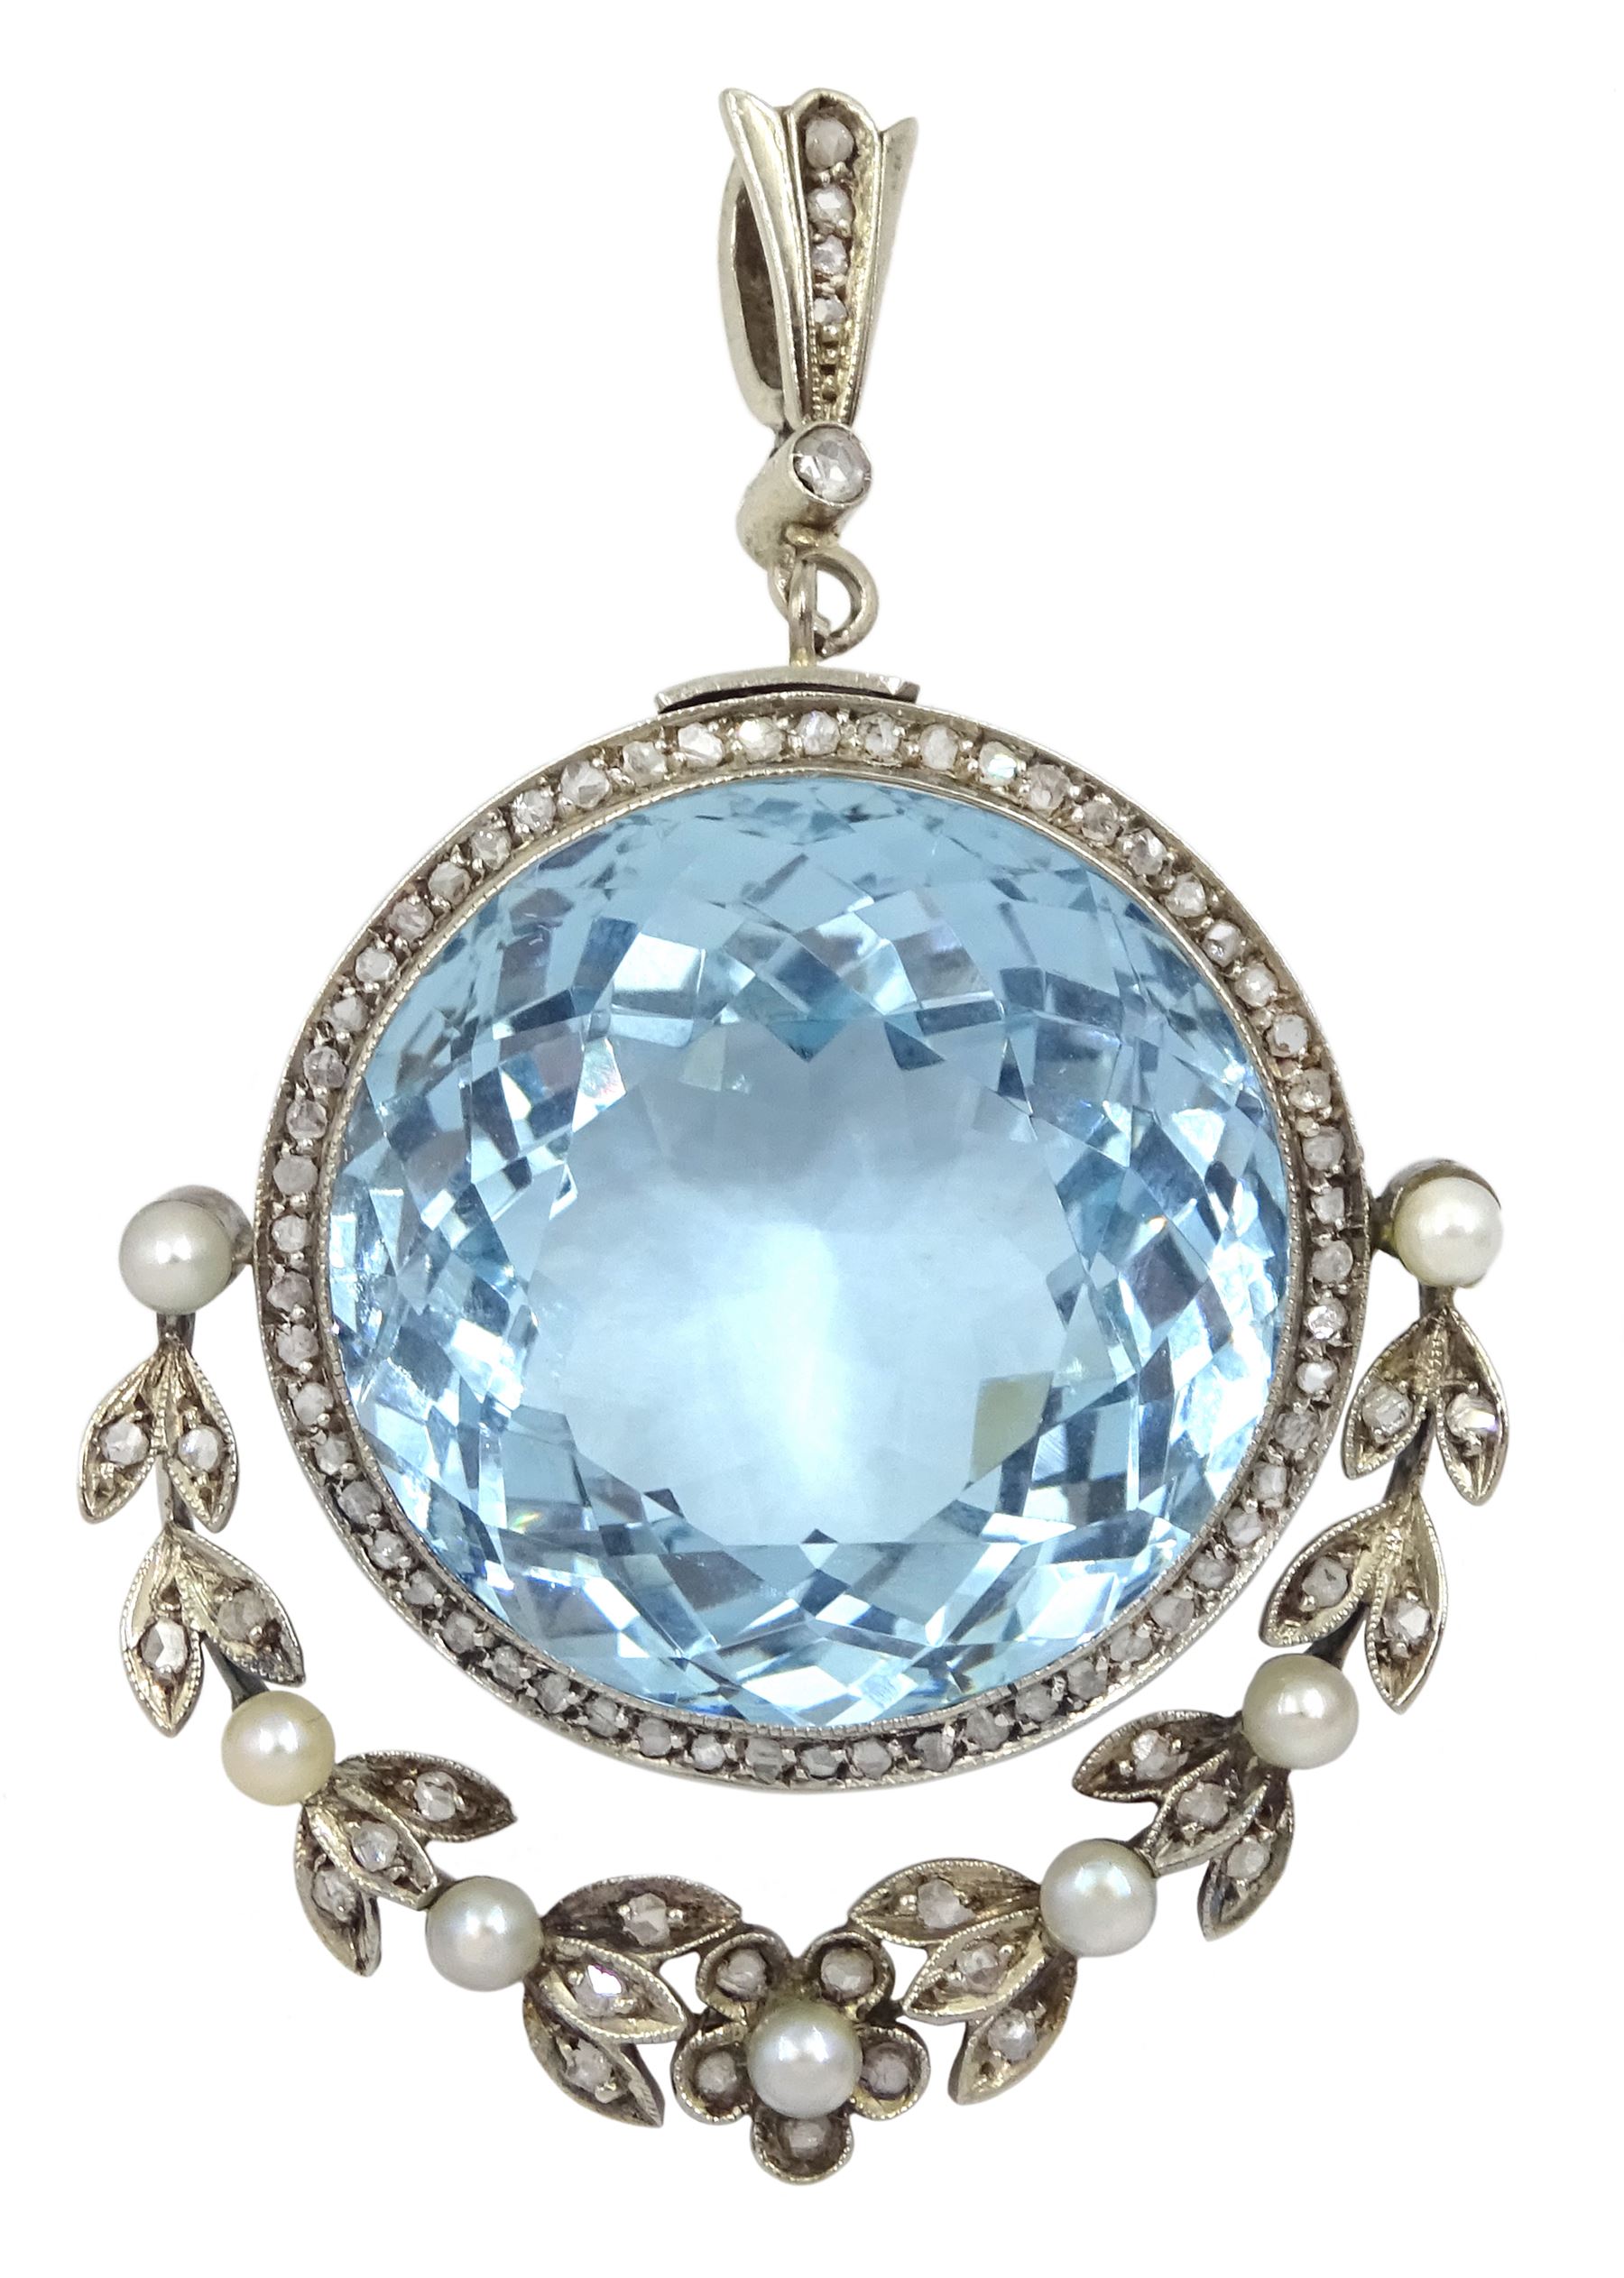 Early 20th century silver and platinum aquamarine